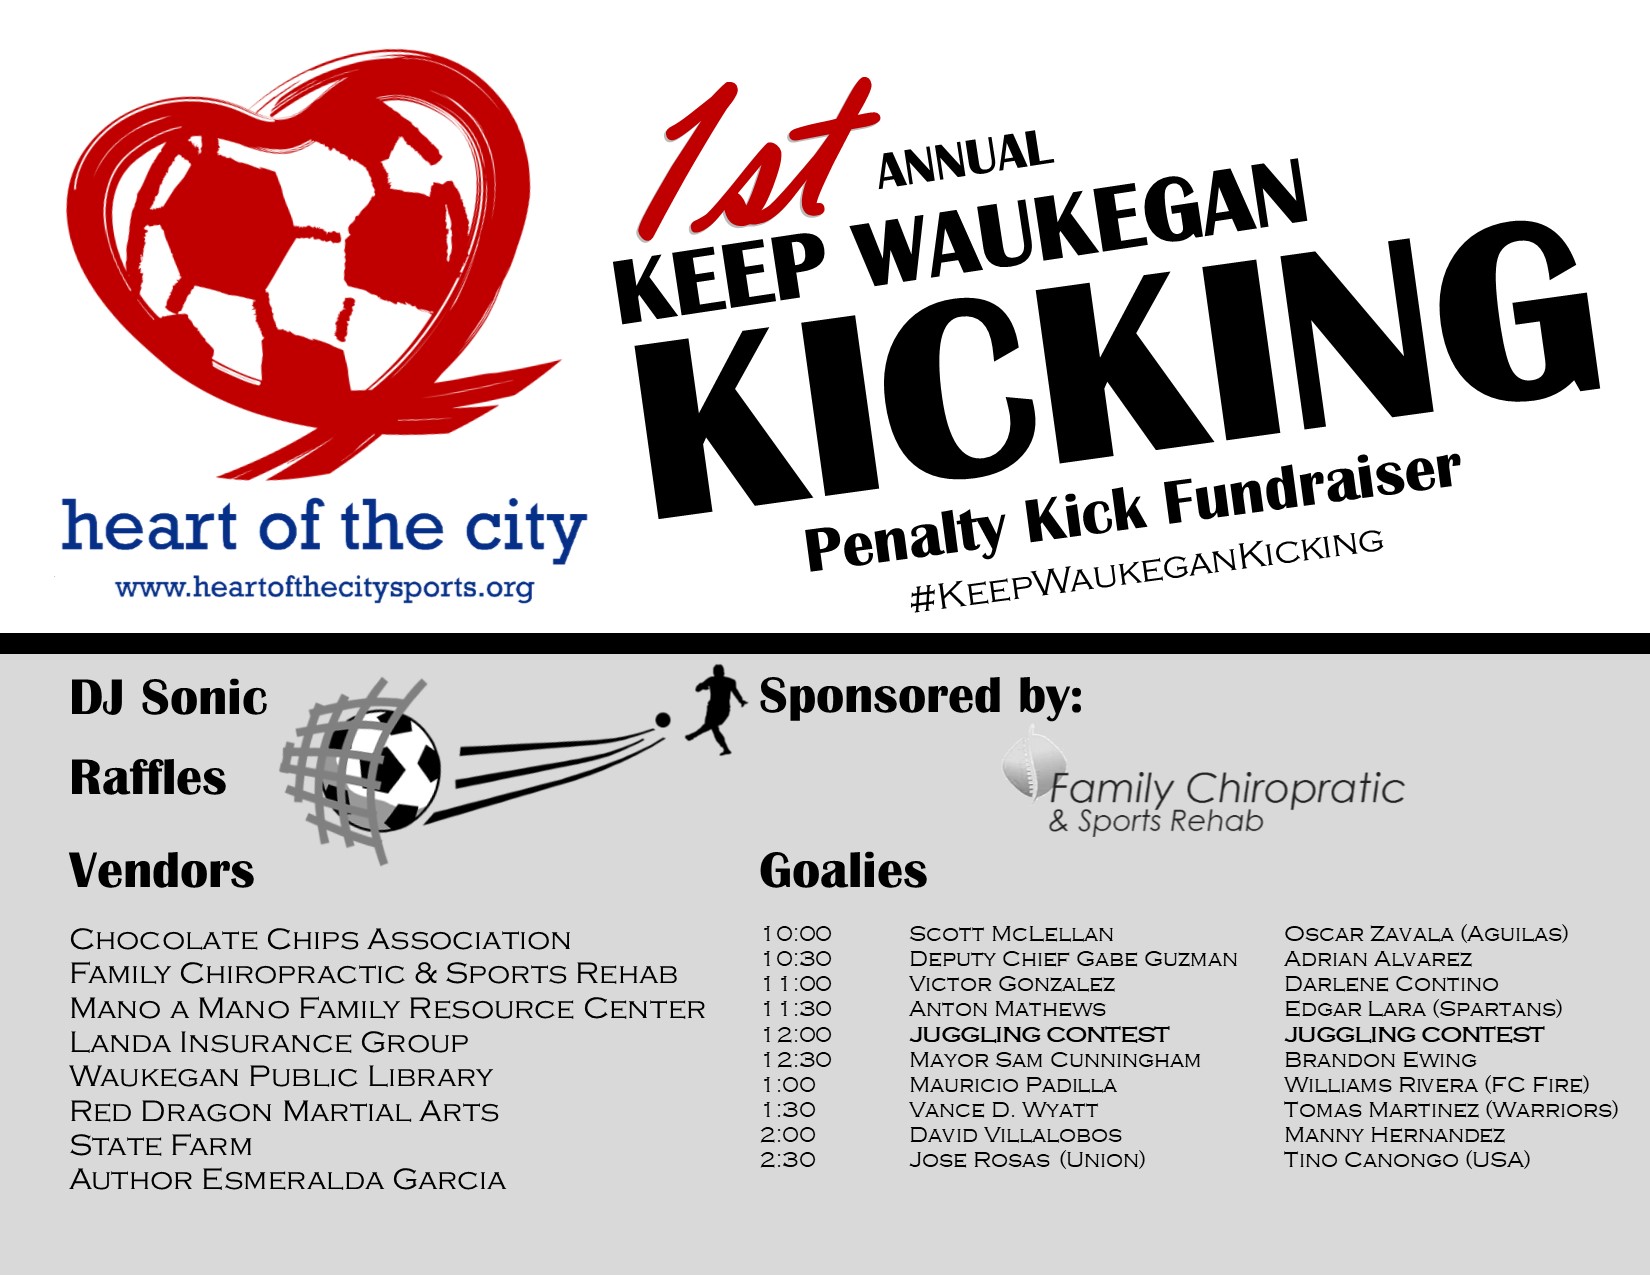 Penalty Kick Fundraiser